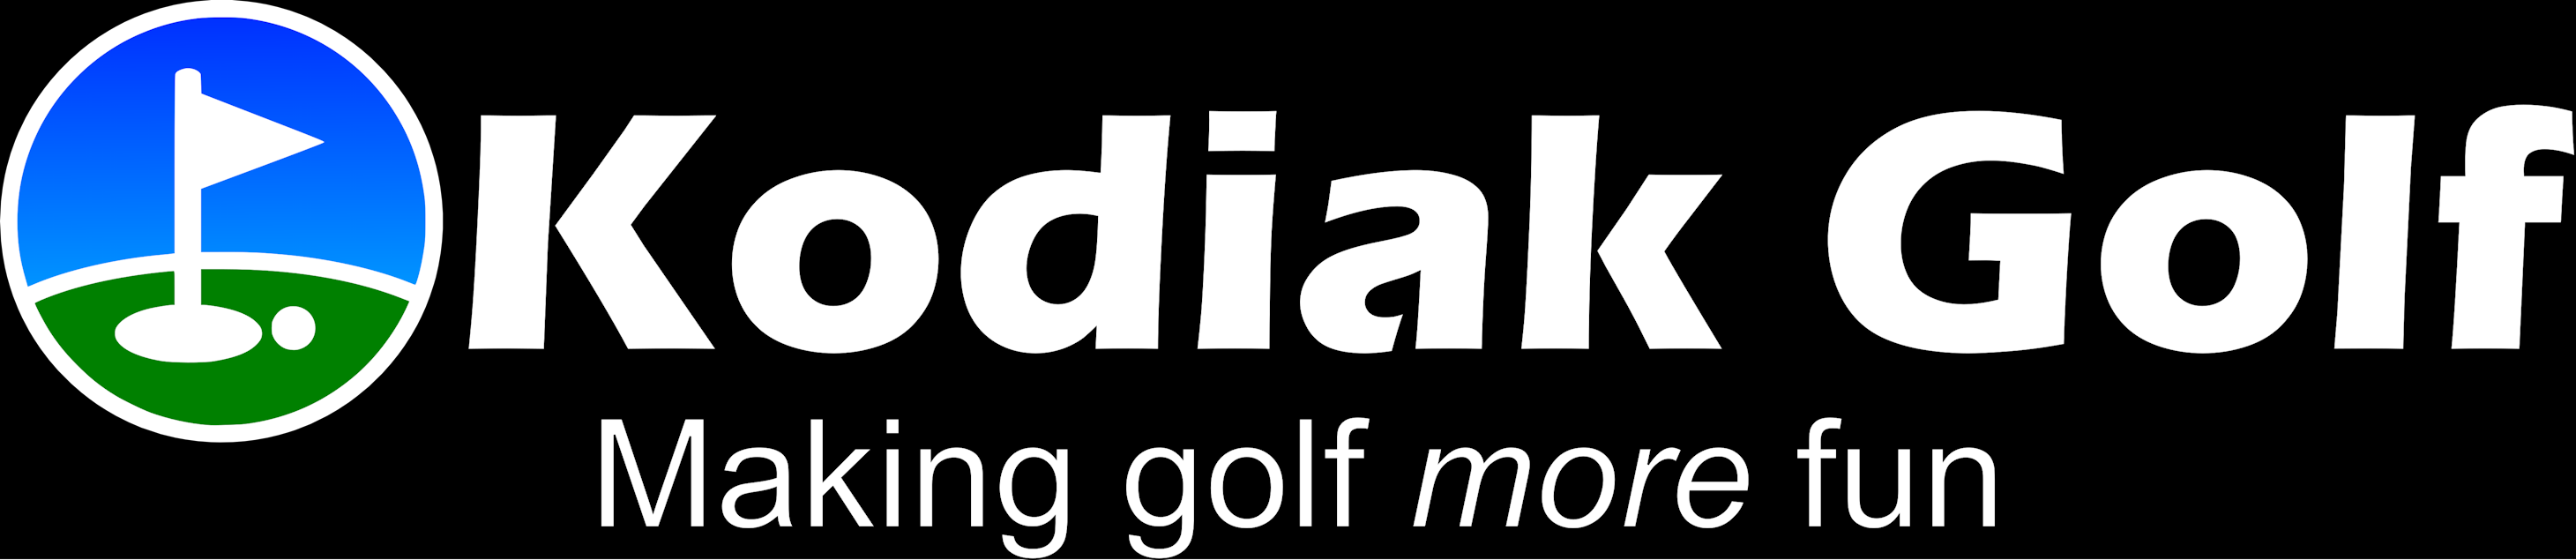 Kodiak Golf Logo